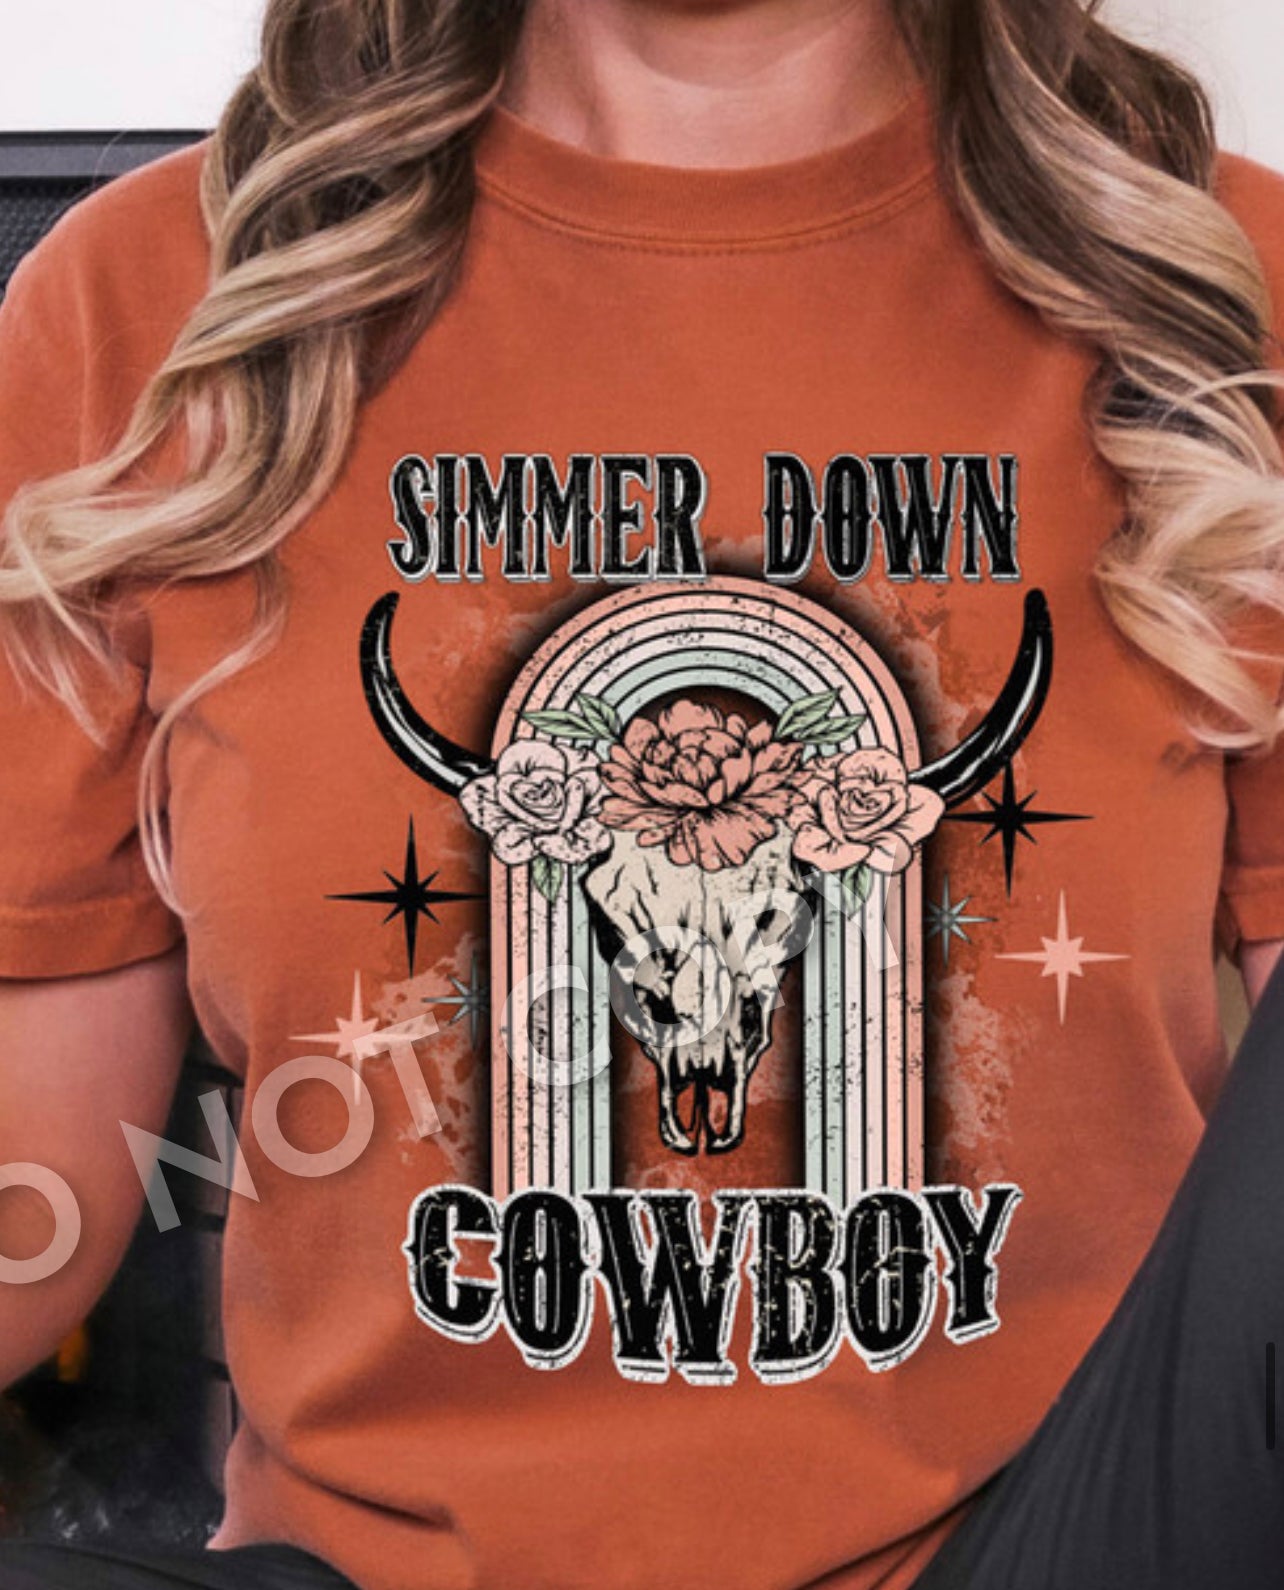 Simmer Down Cowboy - AnnRose Boutique